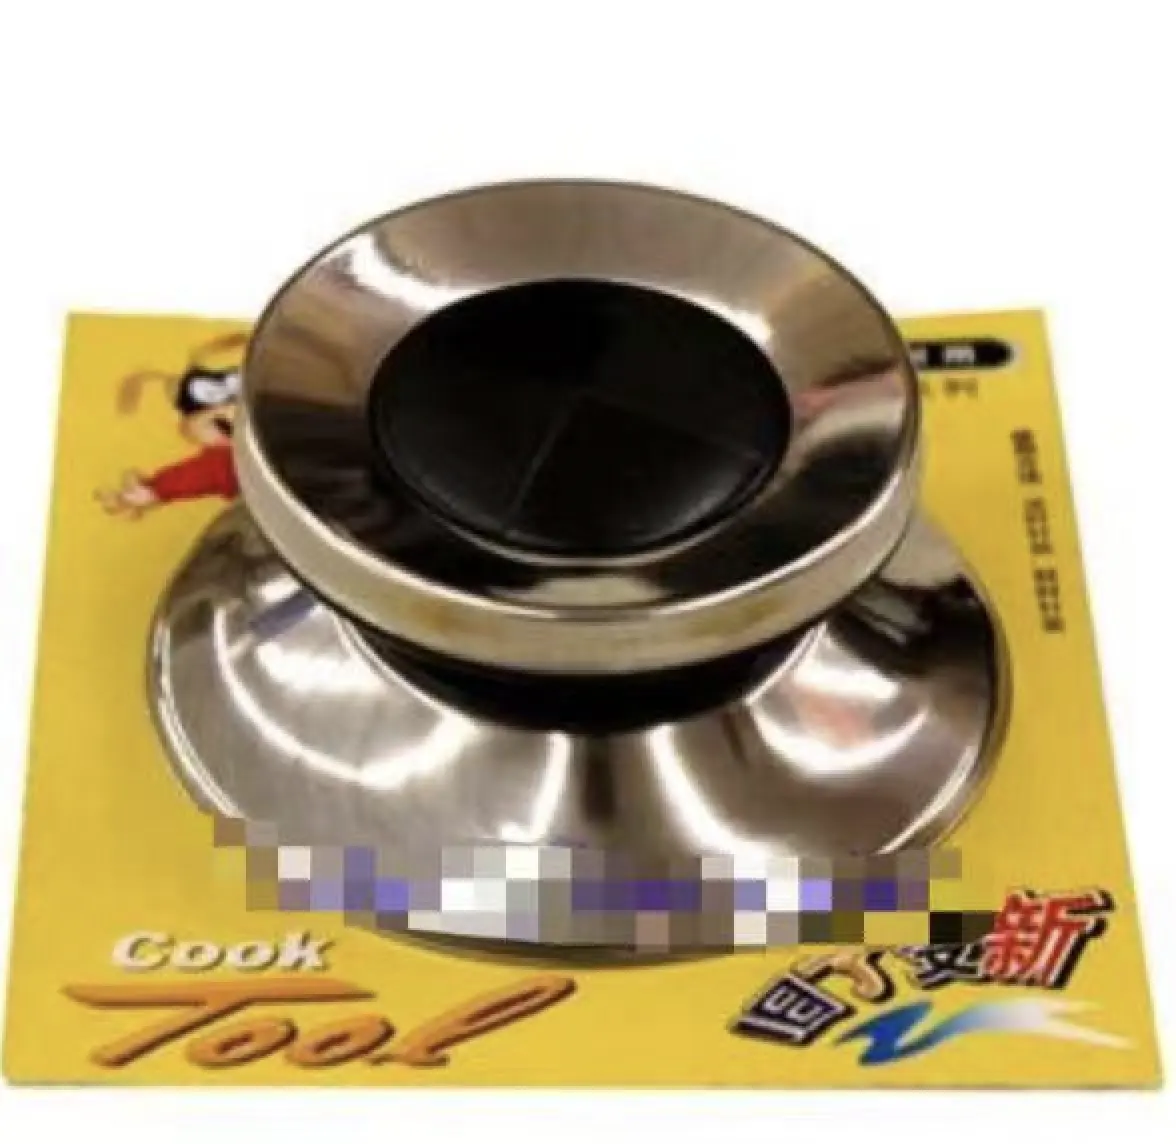 2 x Replacement Pan Lid Knobs Steam Knob Lifting Handle Sauce Pan Pot Heat Resistance